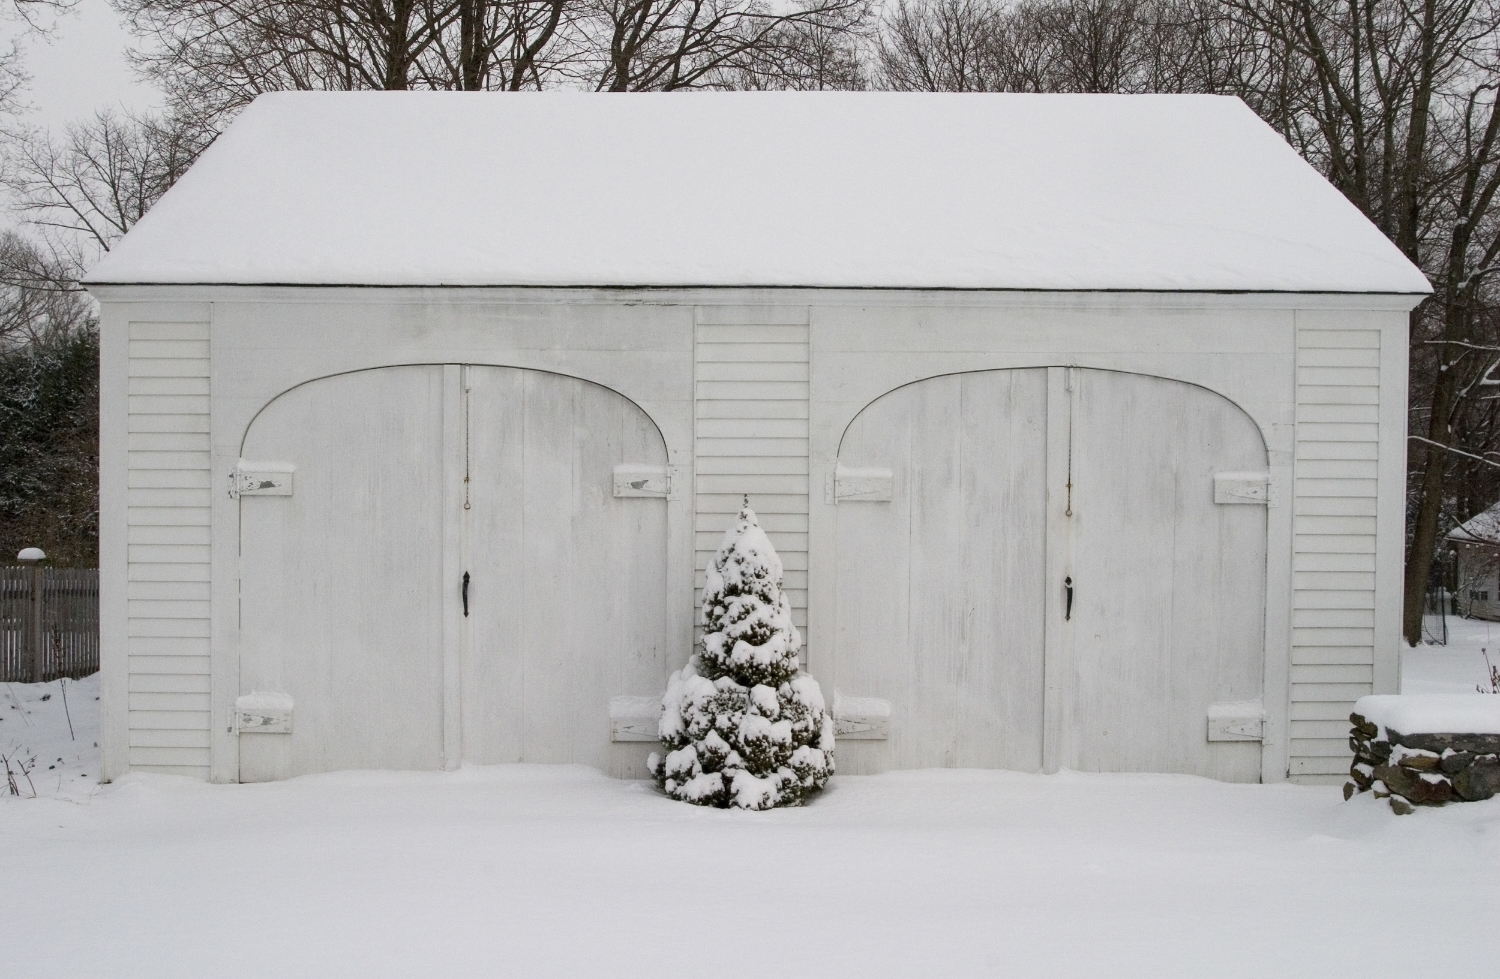 white garage covered in snow.jpg